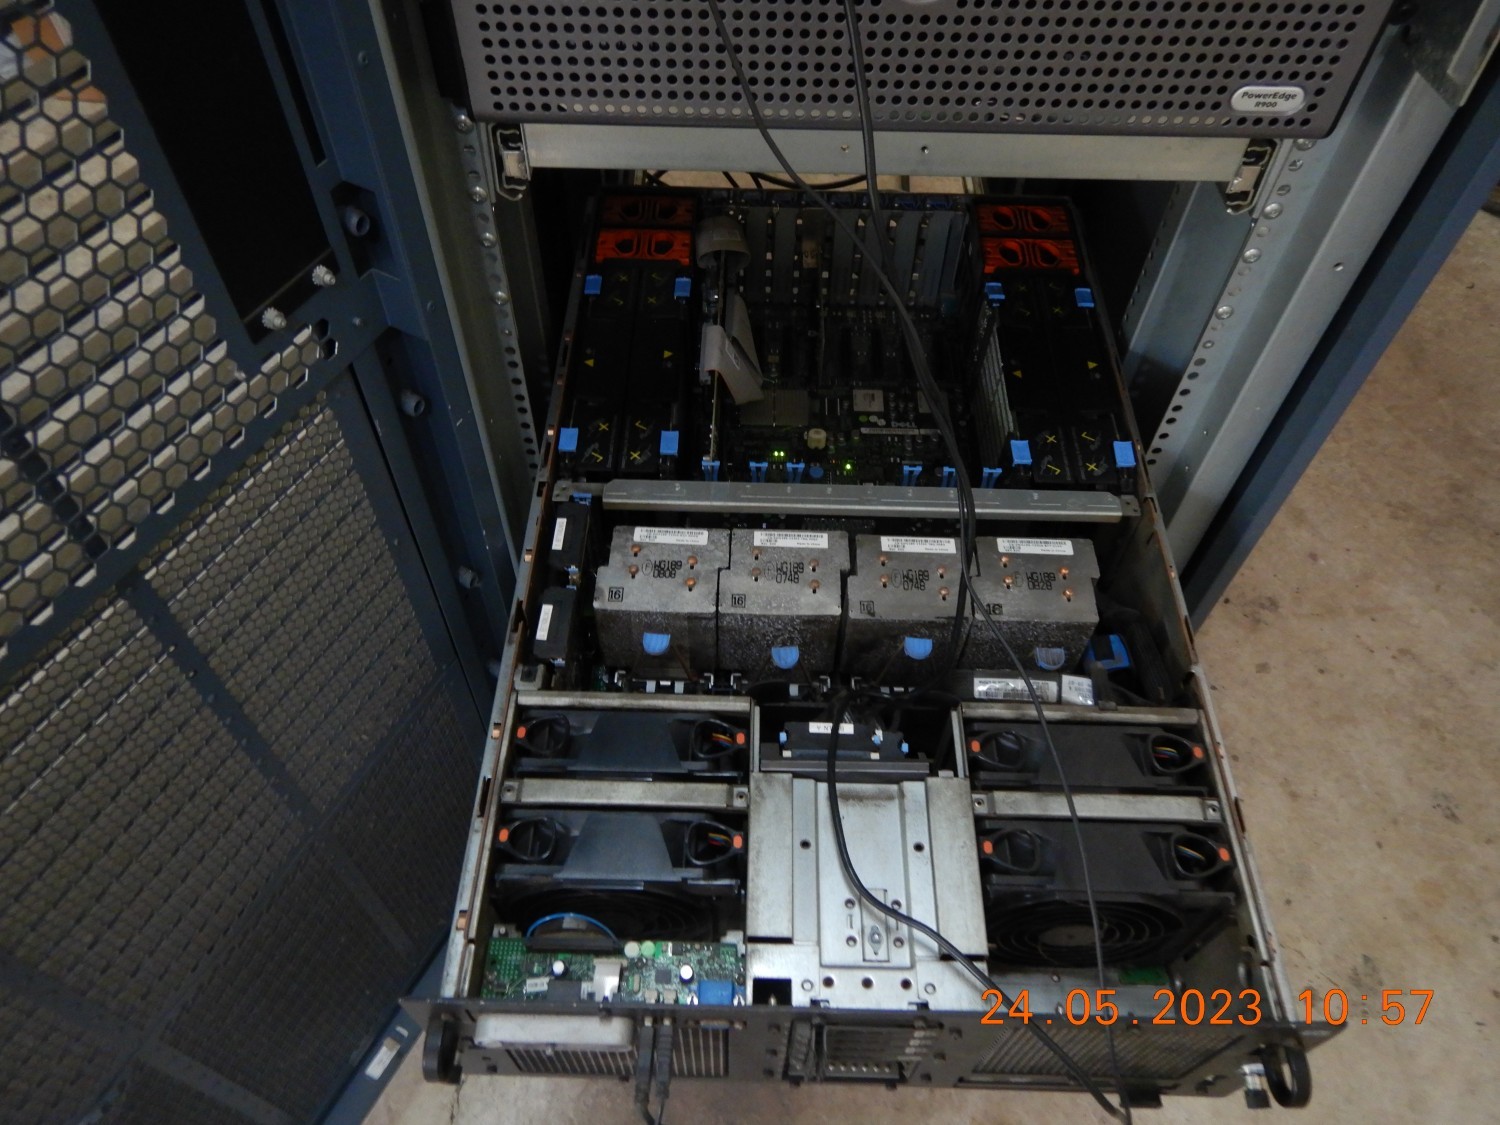 2-x-dell-r900-4-x-4-16-core-zeon-servers-digital-server-rack-3000-watt-powerware-ups-with-new-batteries-may-2022-big-24